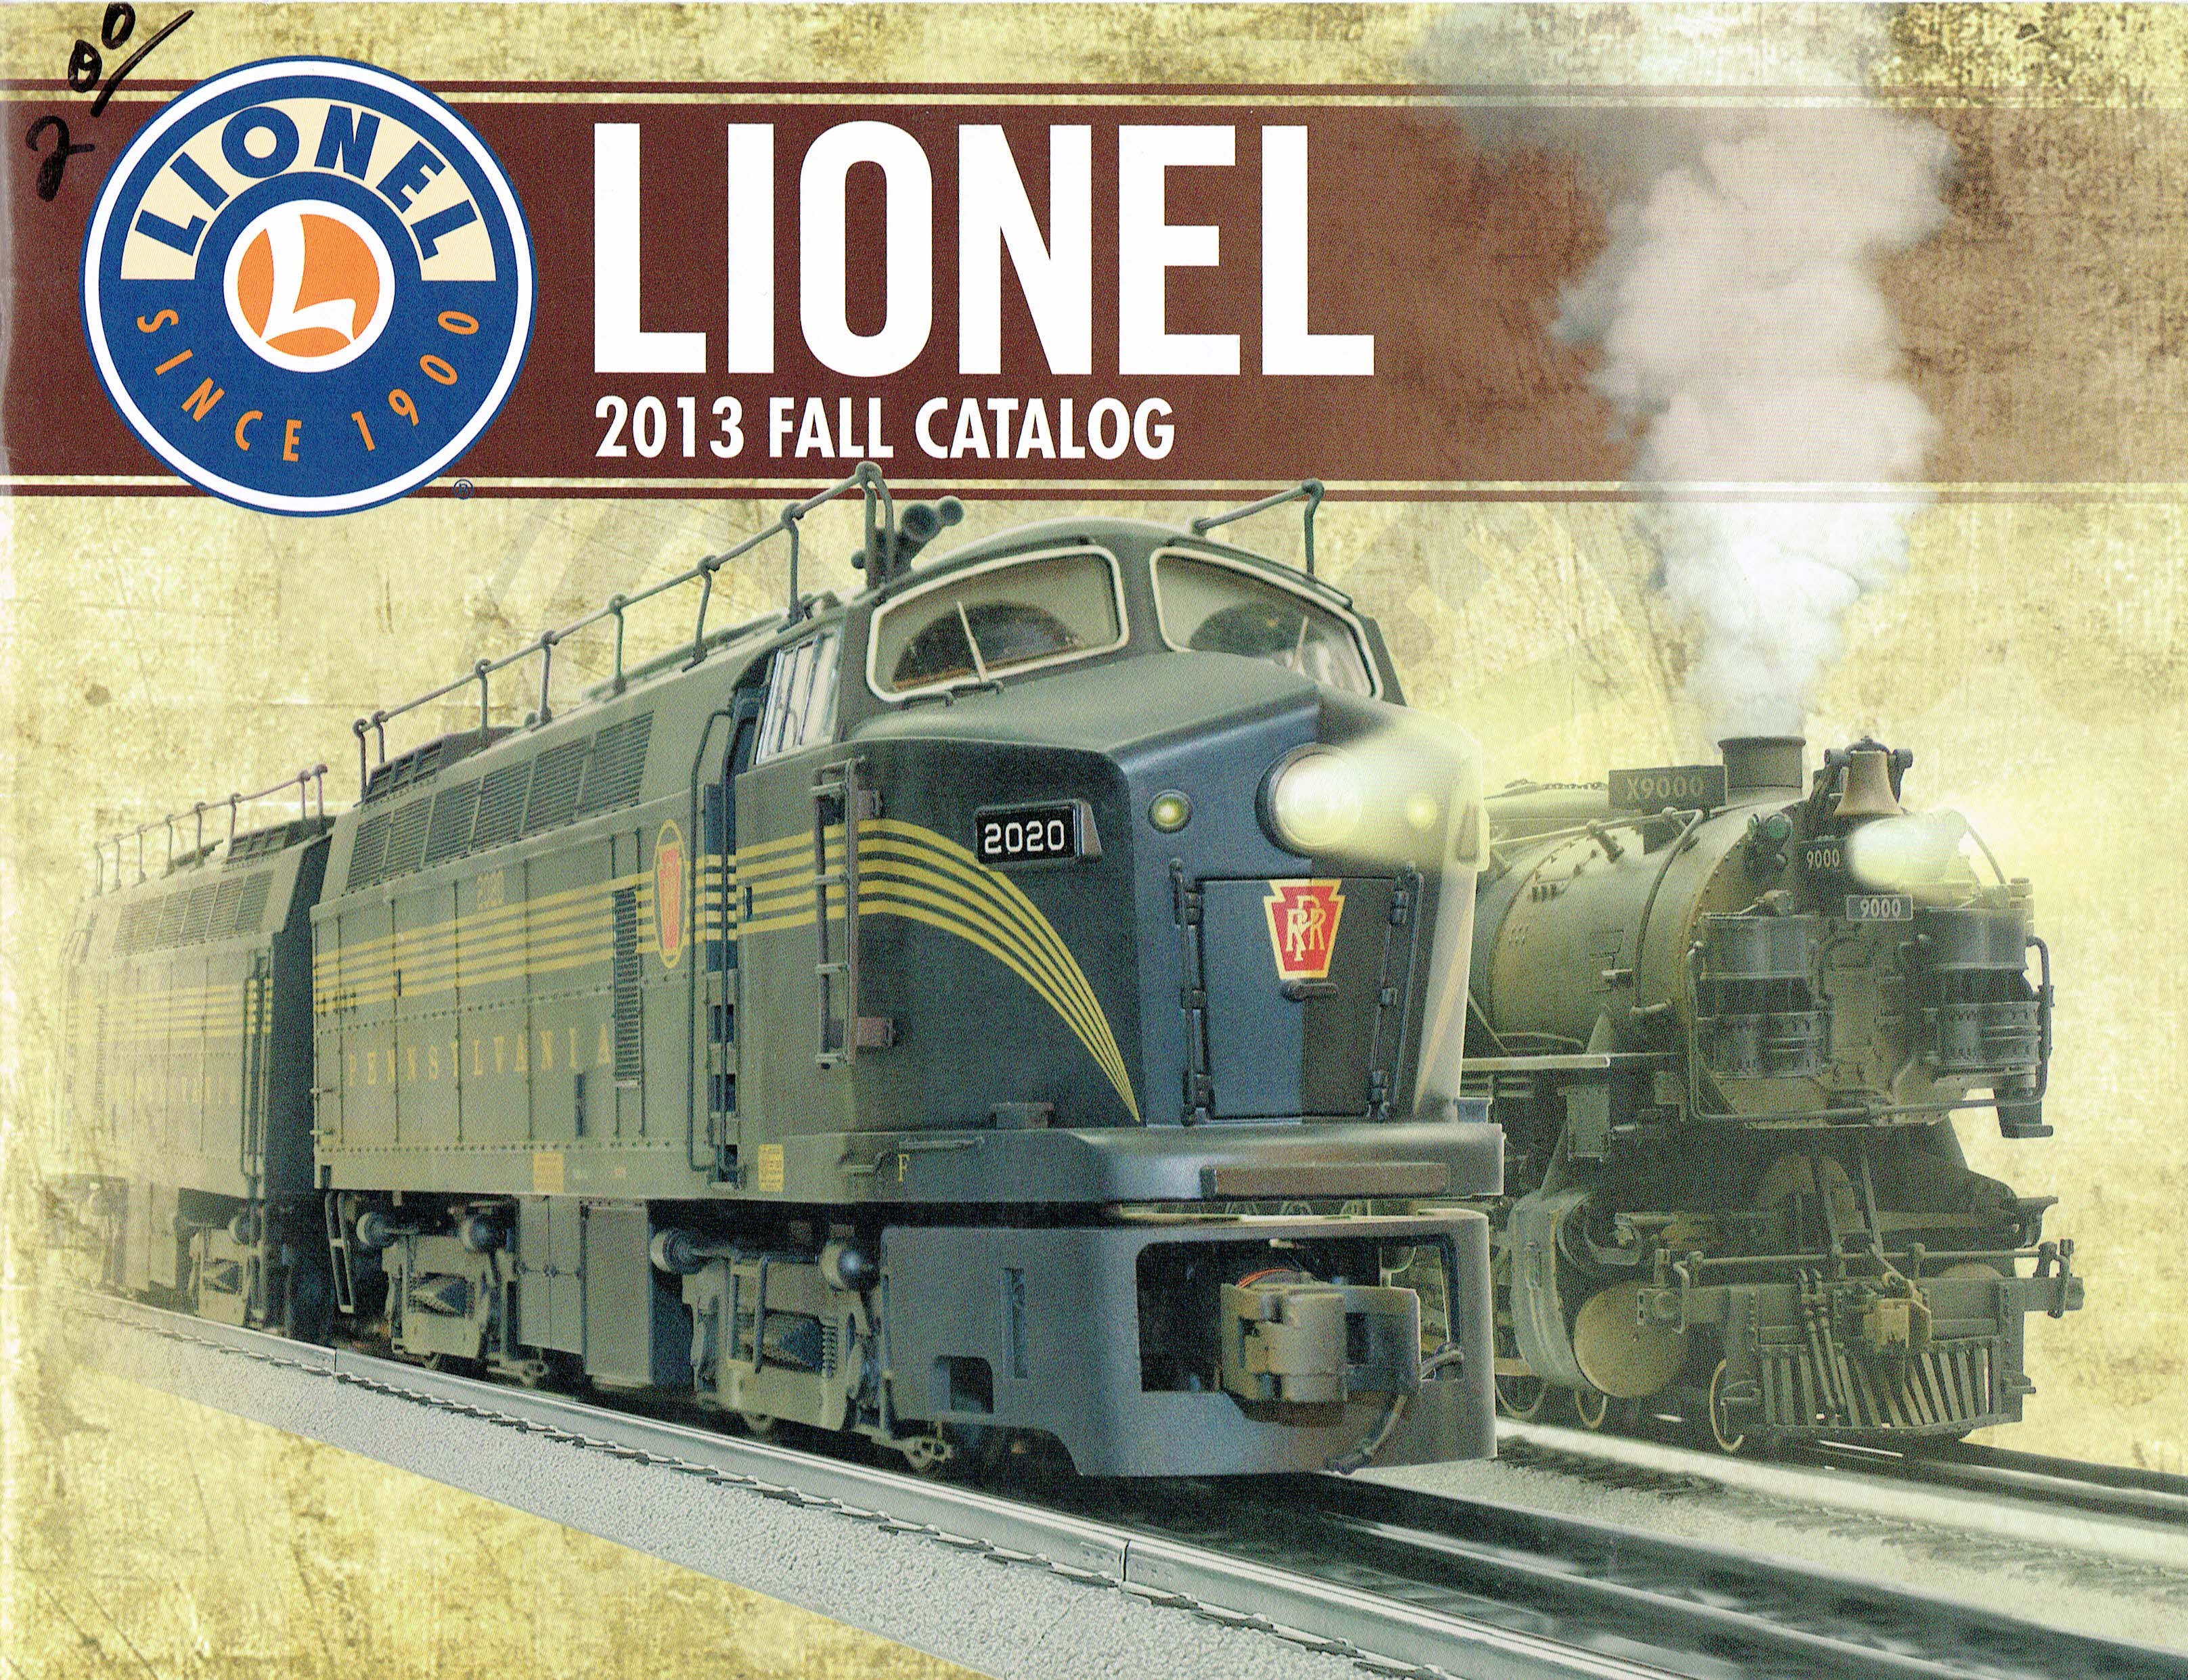 Lionel 2013 Fall Catalog image